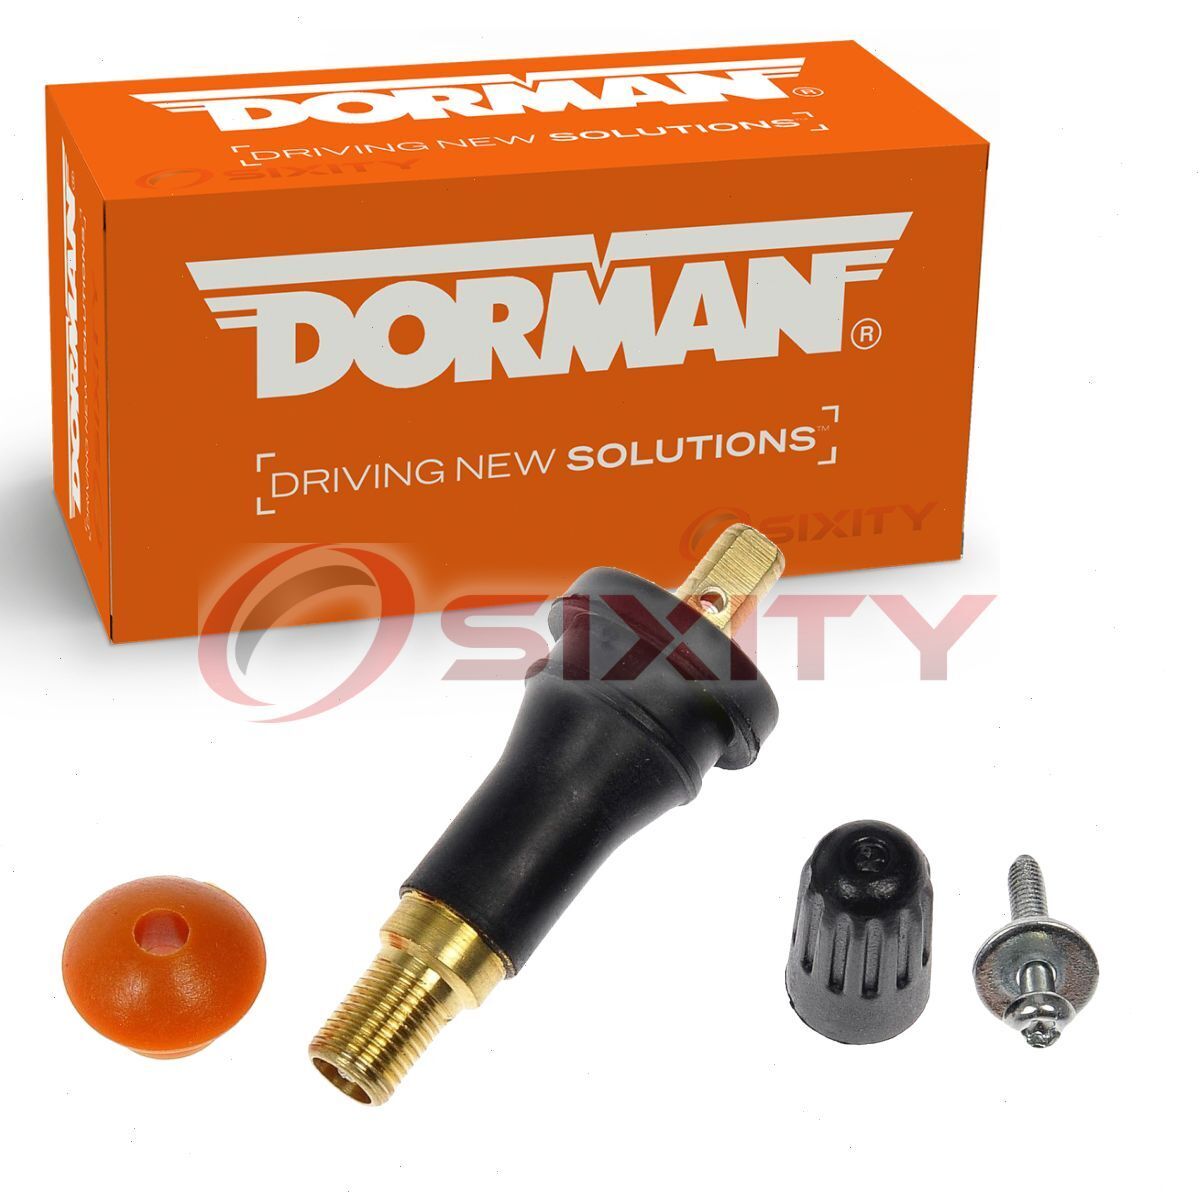 Dorman 974-900 TPMS Valve Kit for Tire Pressure Monitoring System  Wheel  ud